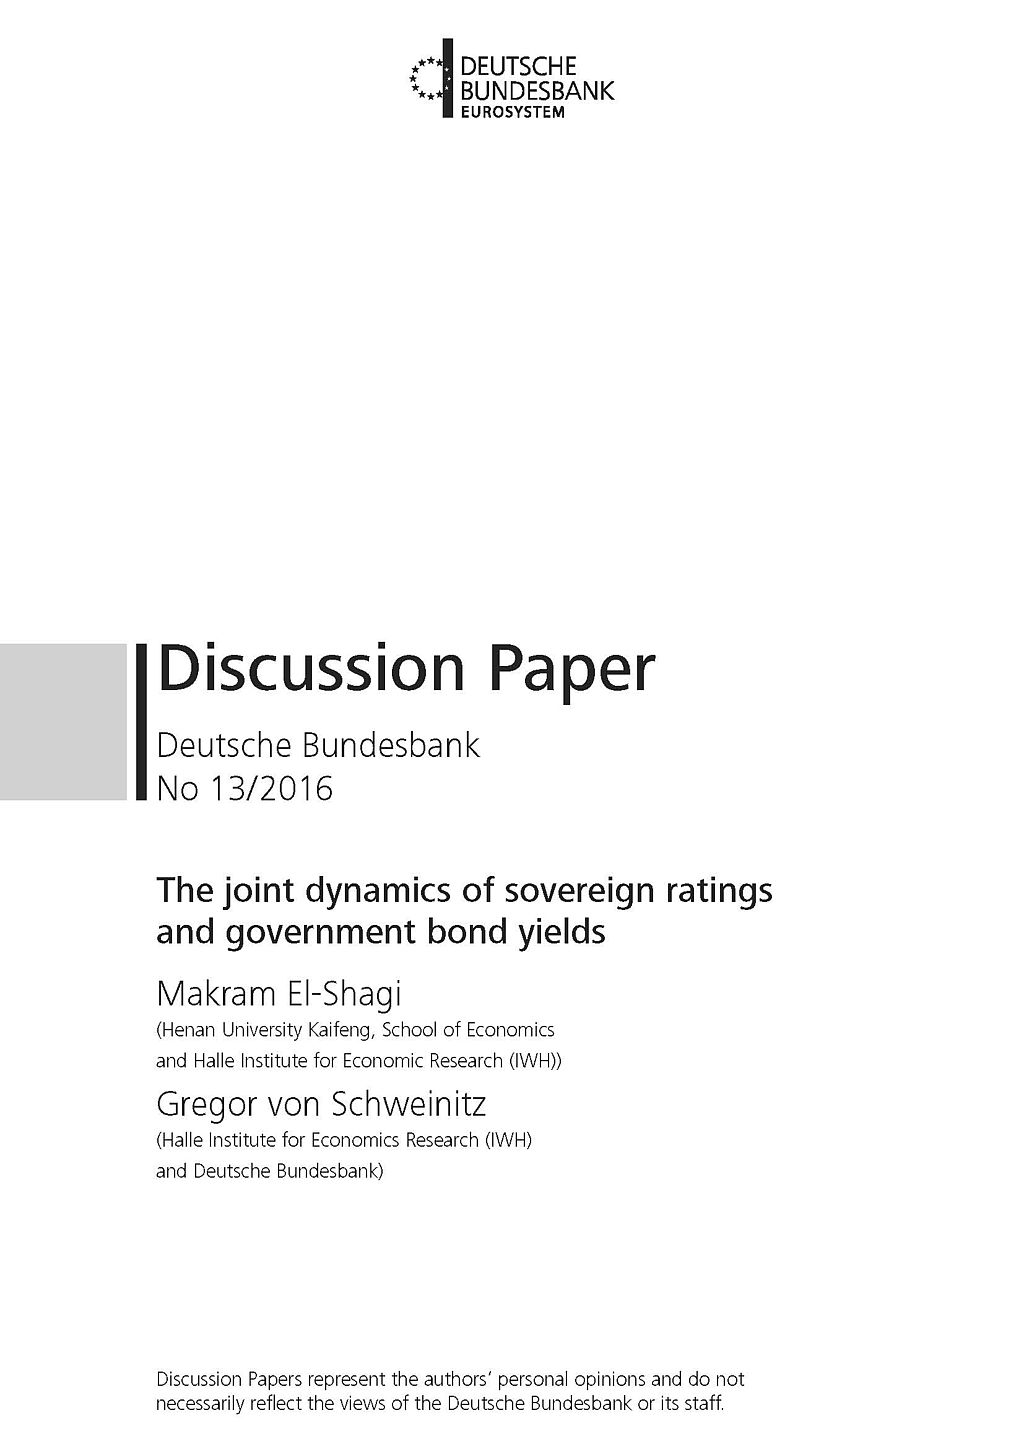 cover_Deutsche-Bundesbank-Discussion-Paper_2016-13.jpg